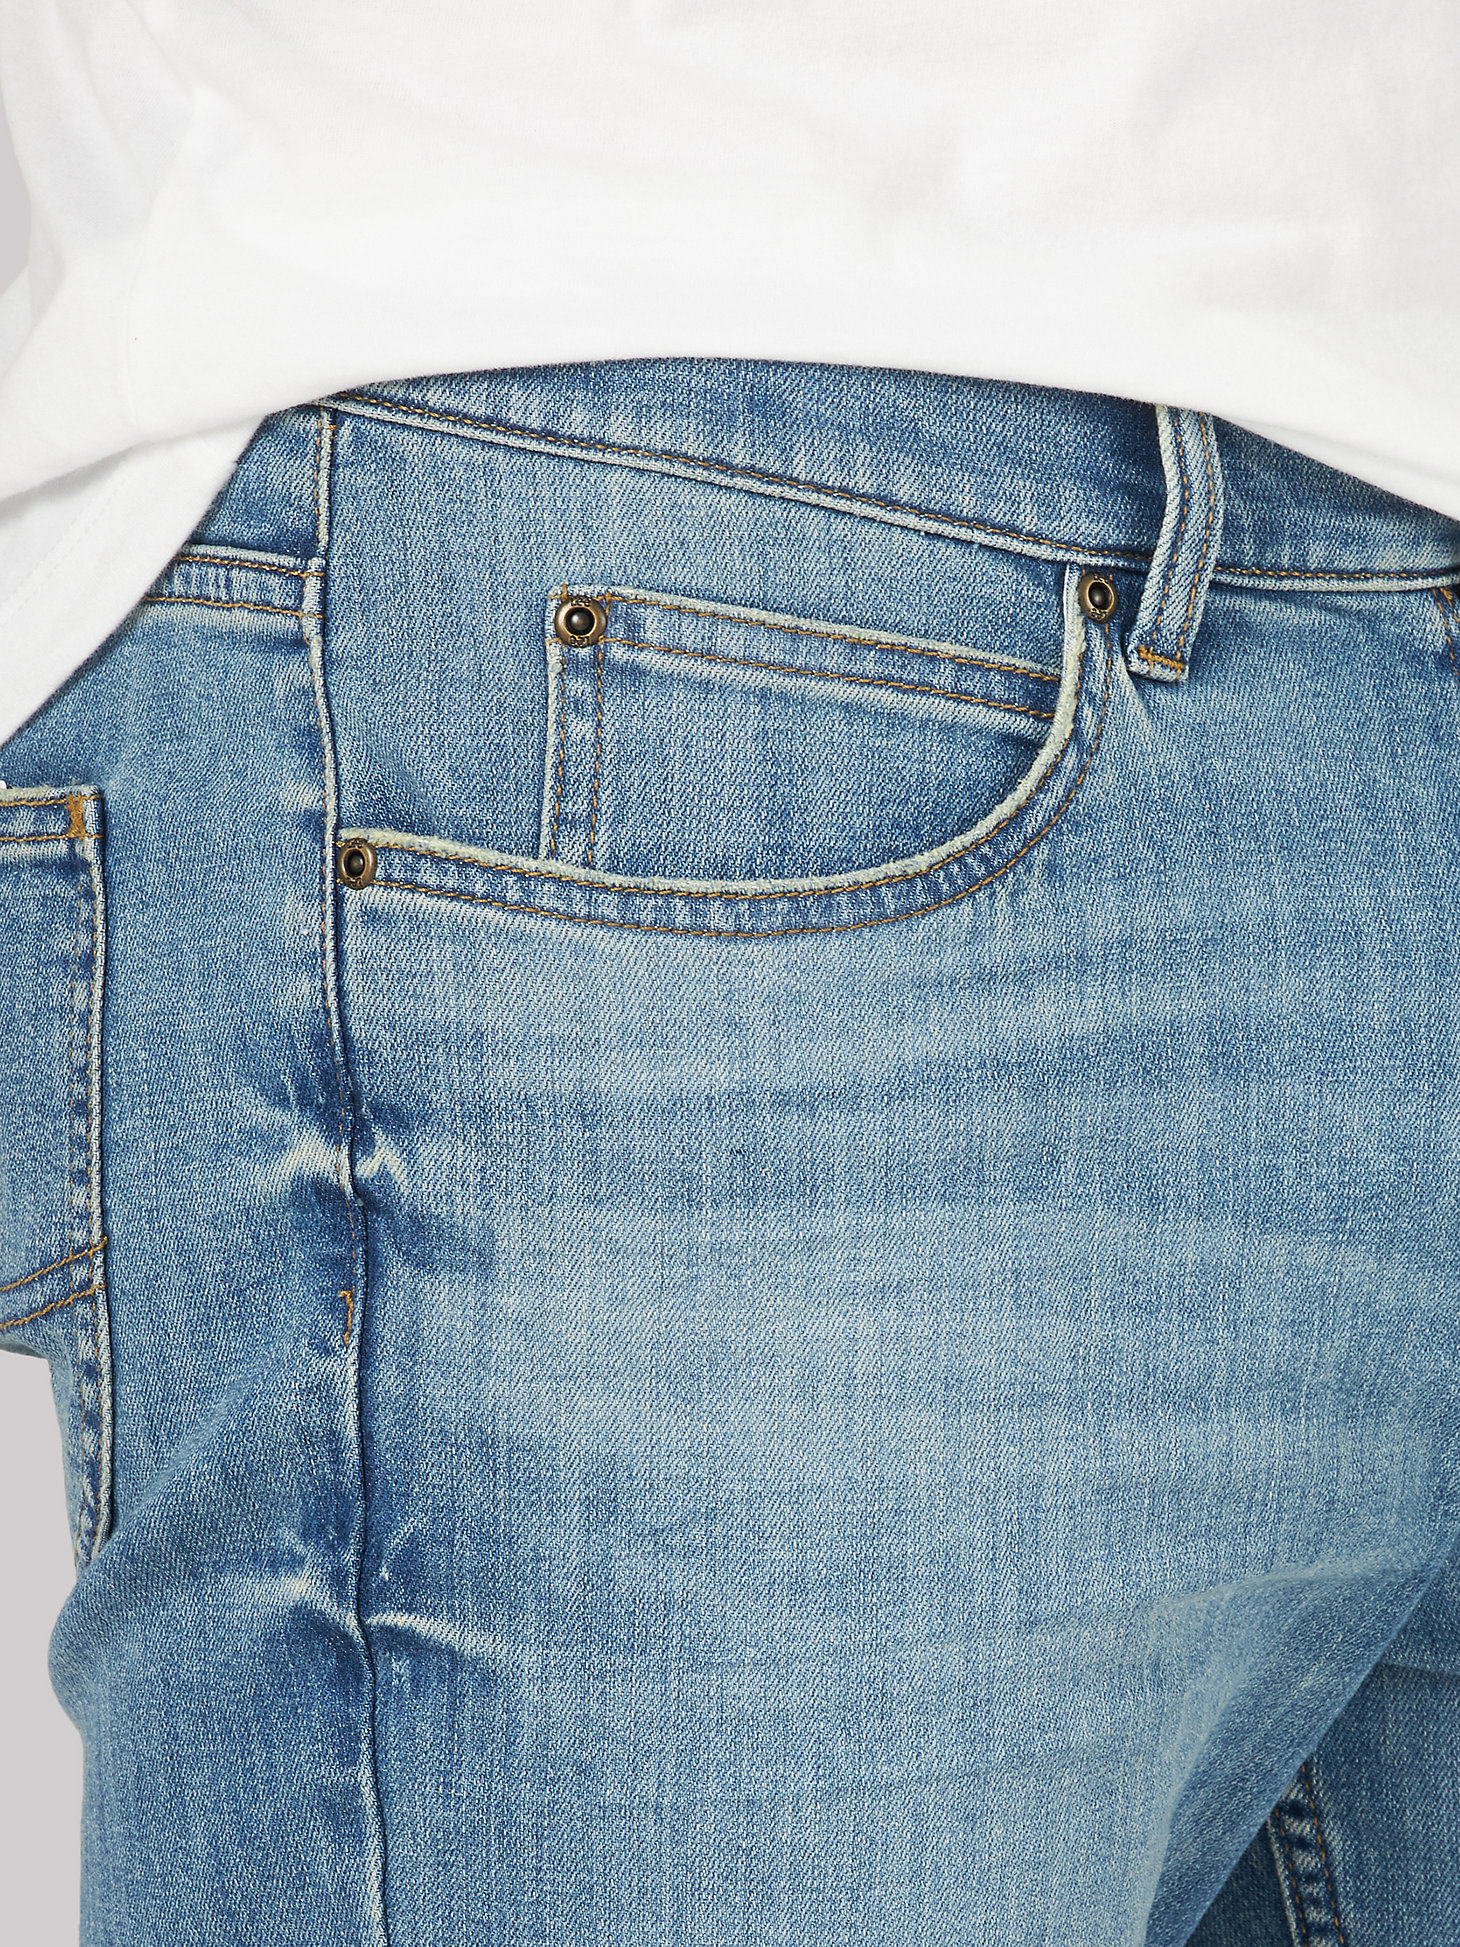 Men's Legendary Regular Fit 5-Pocket Short in Venture alternative view 3